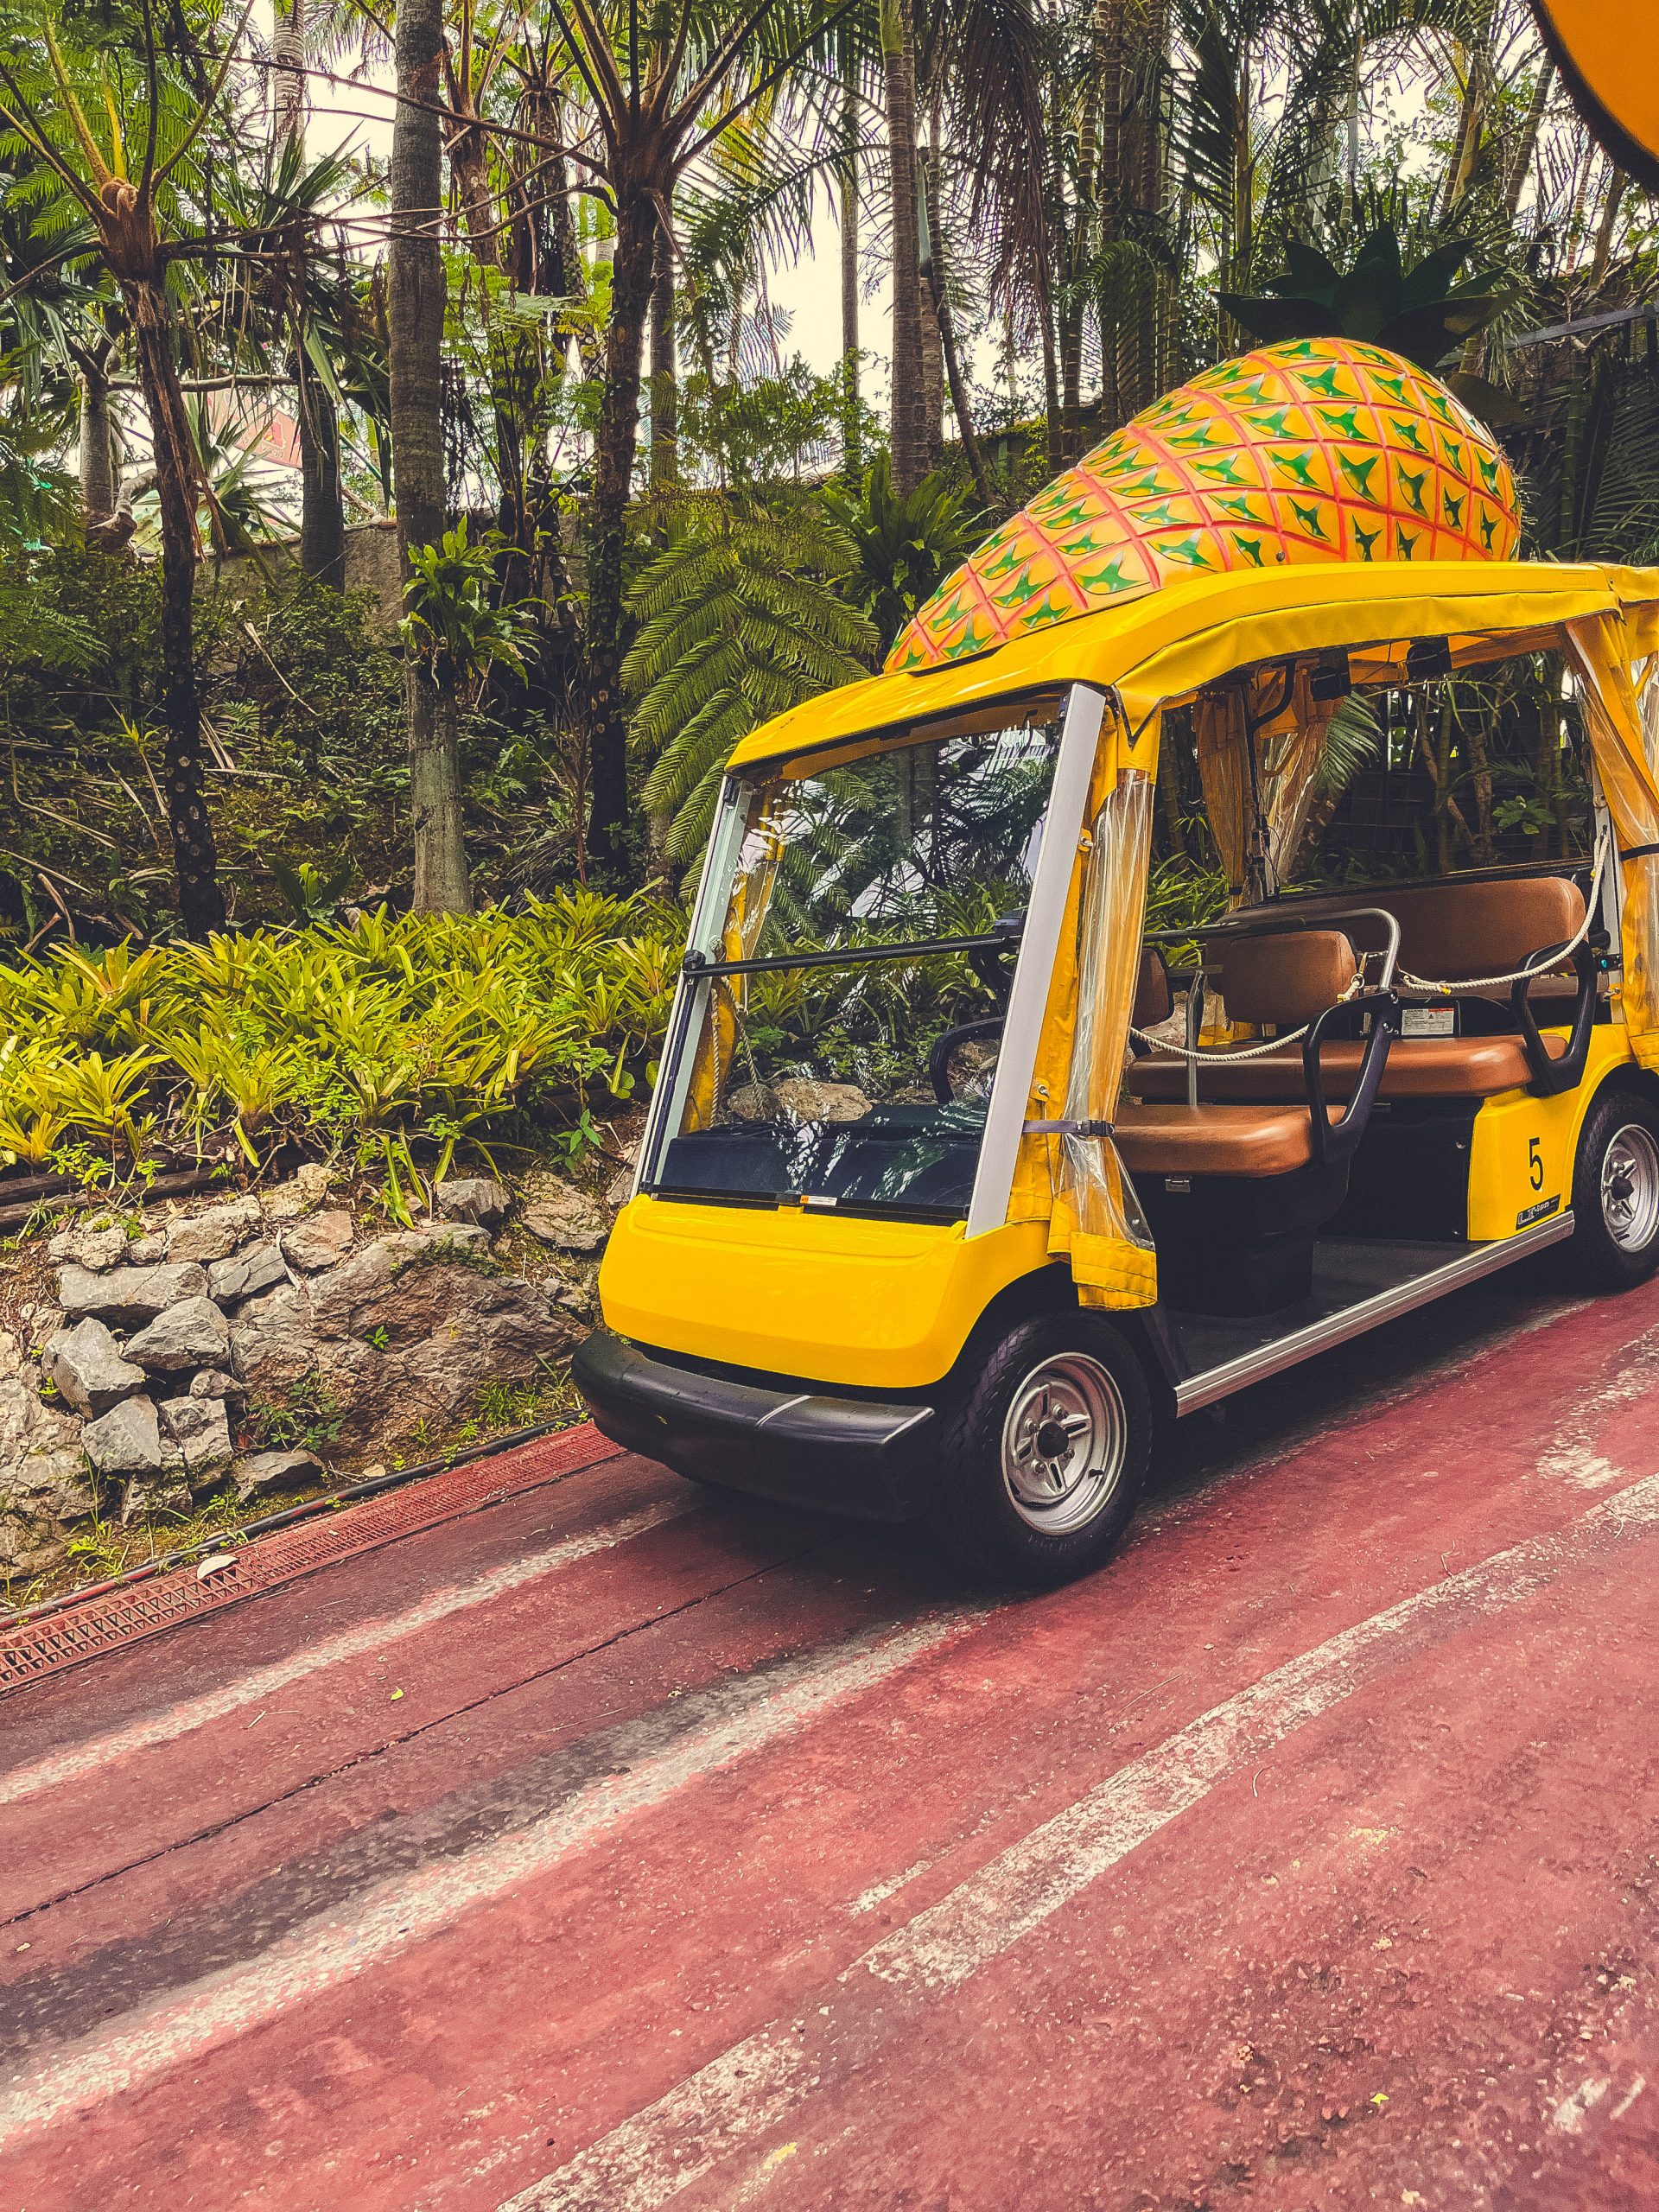 Self driving pineapple shaped cart Nago Pineapple Park